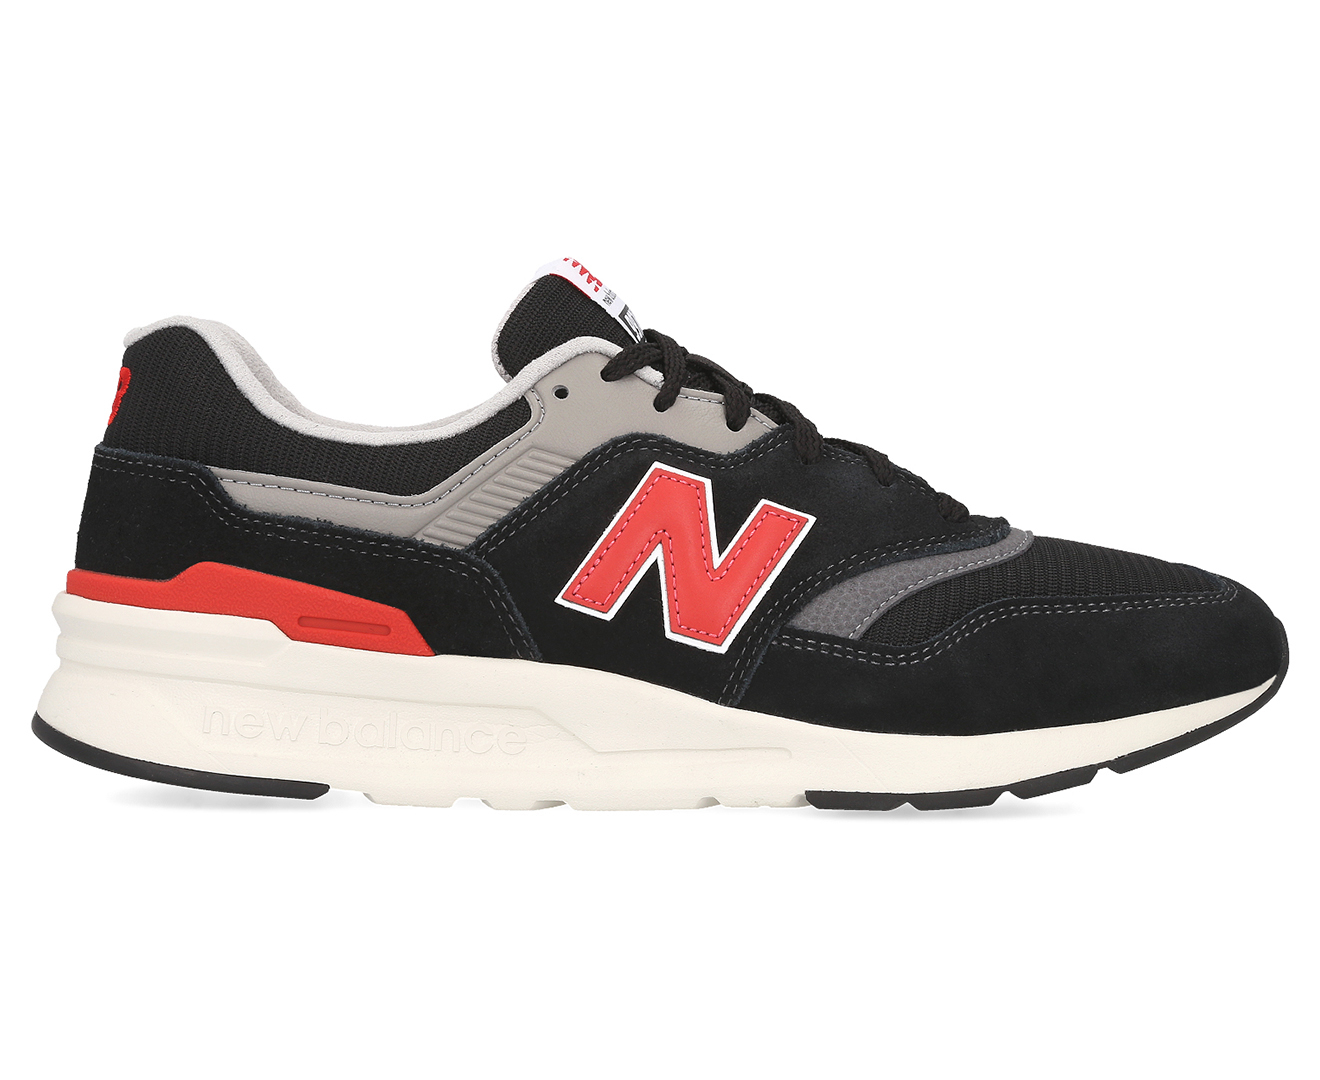 New Balance Men's 997H Sneakers - Black/Red | Catch.com.au